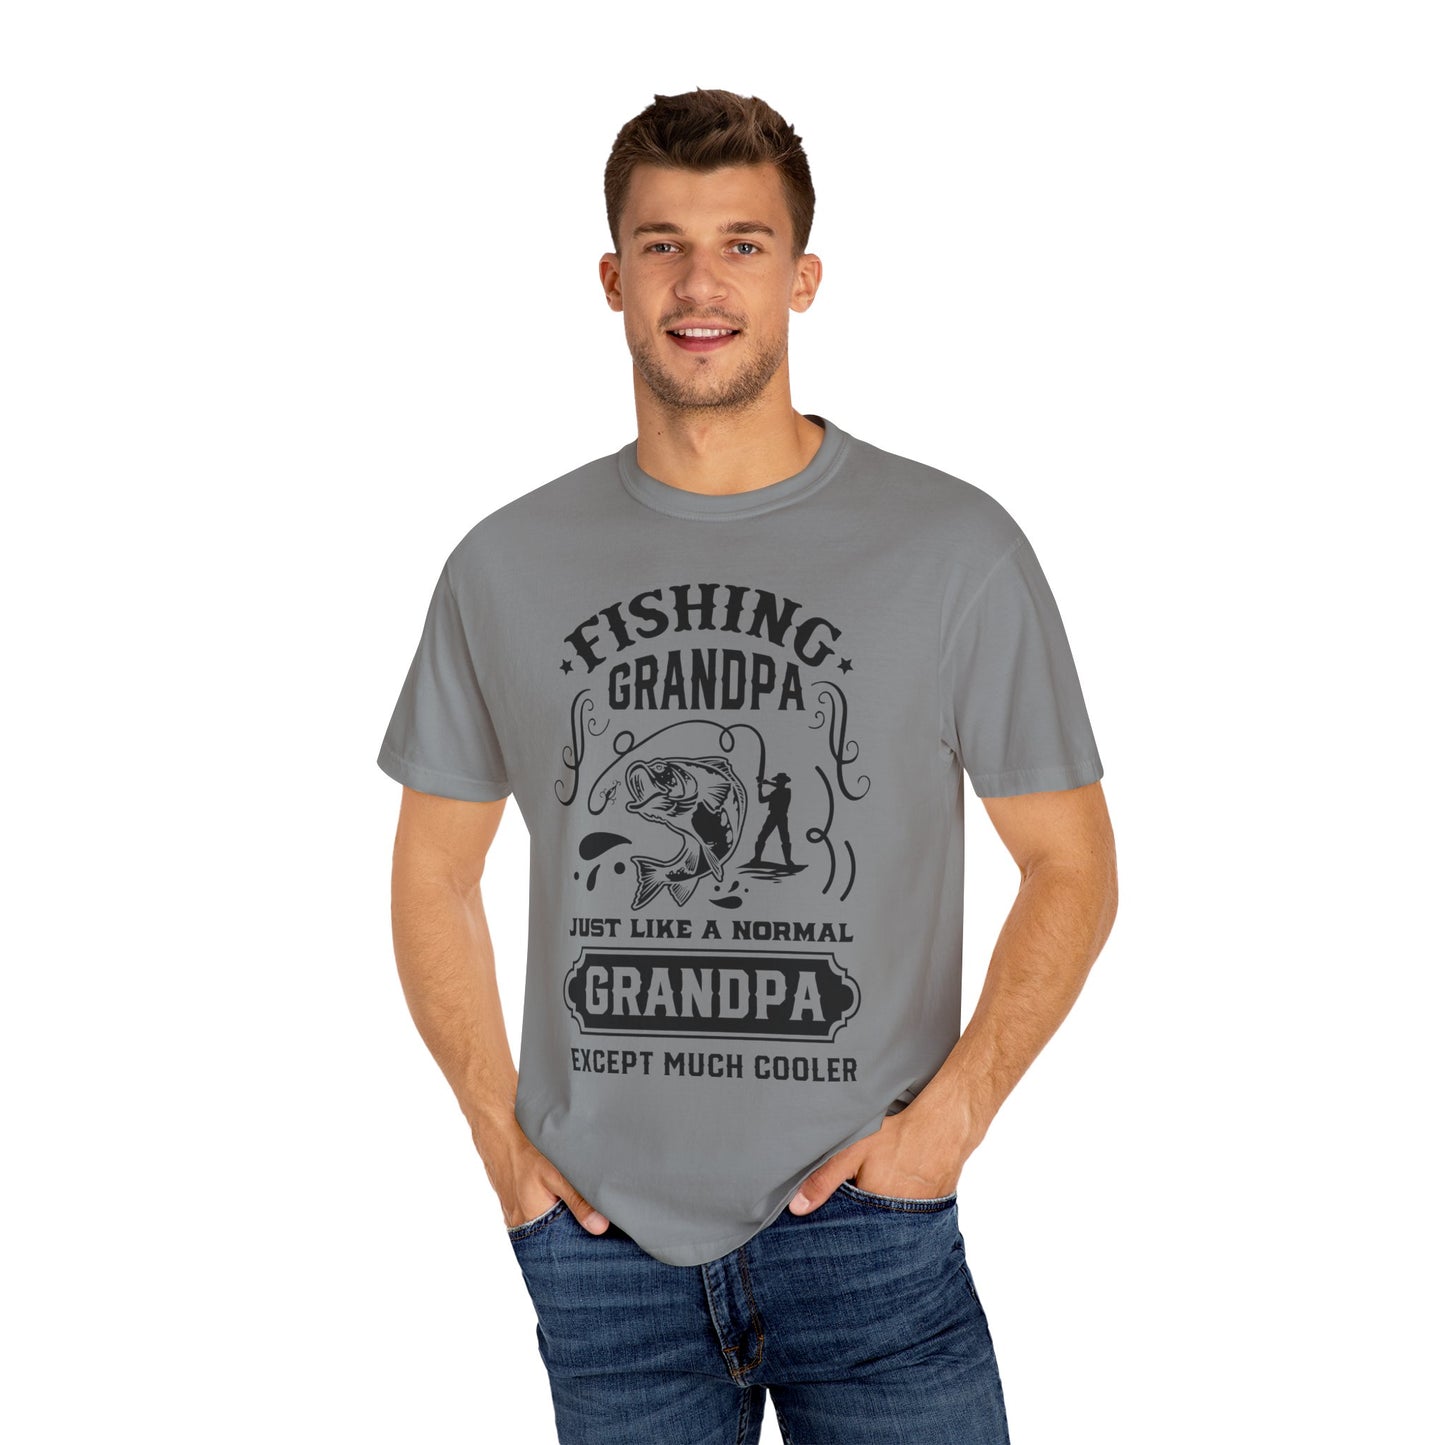 Fishing Grandpa is cool: Unisex Garment-Dyed T-shirt